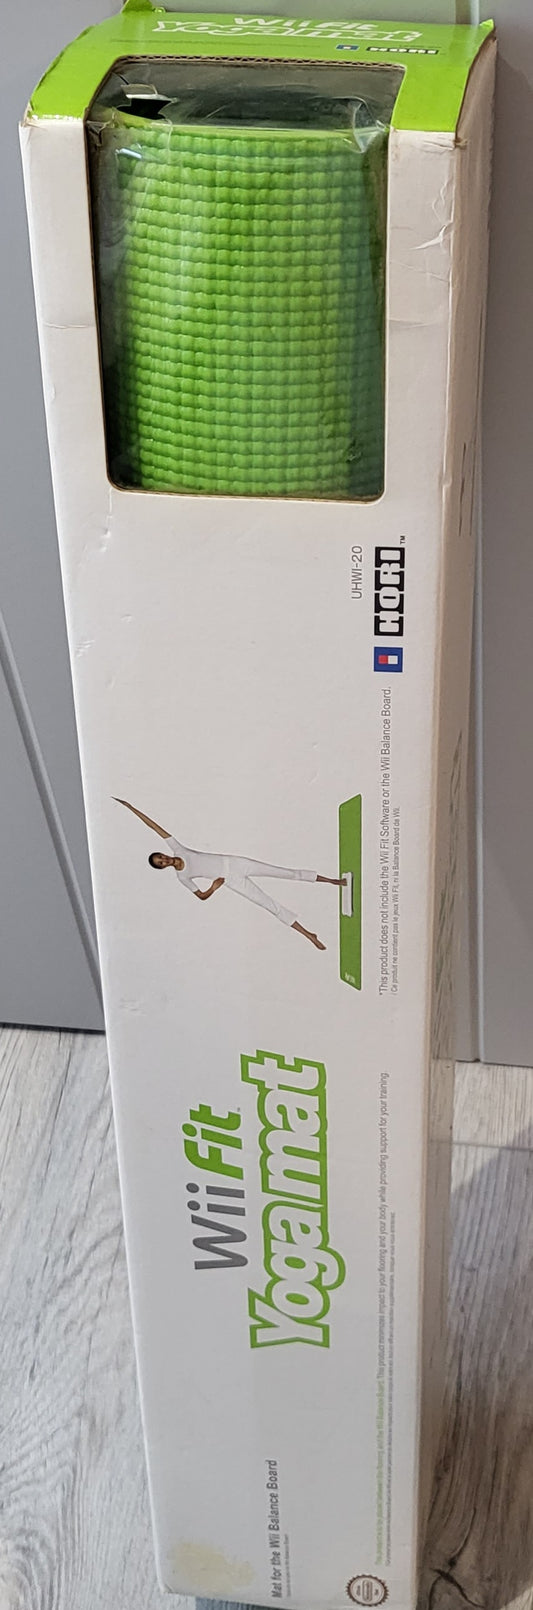 Boxed Yoga Mat Nintendo Wii Accessory